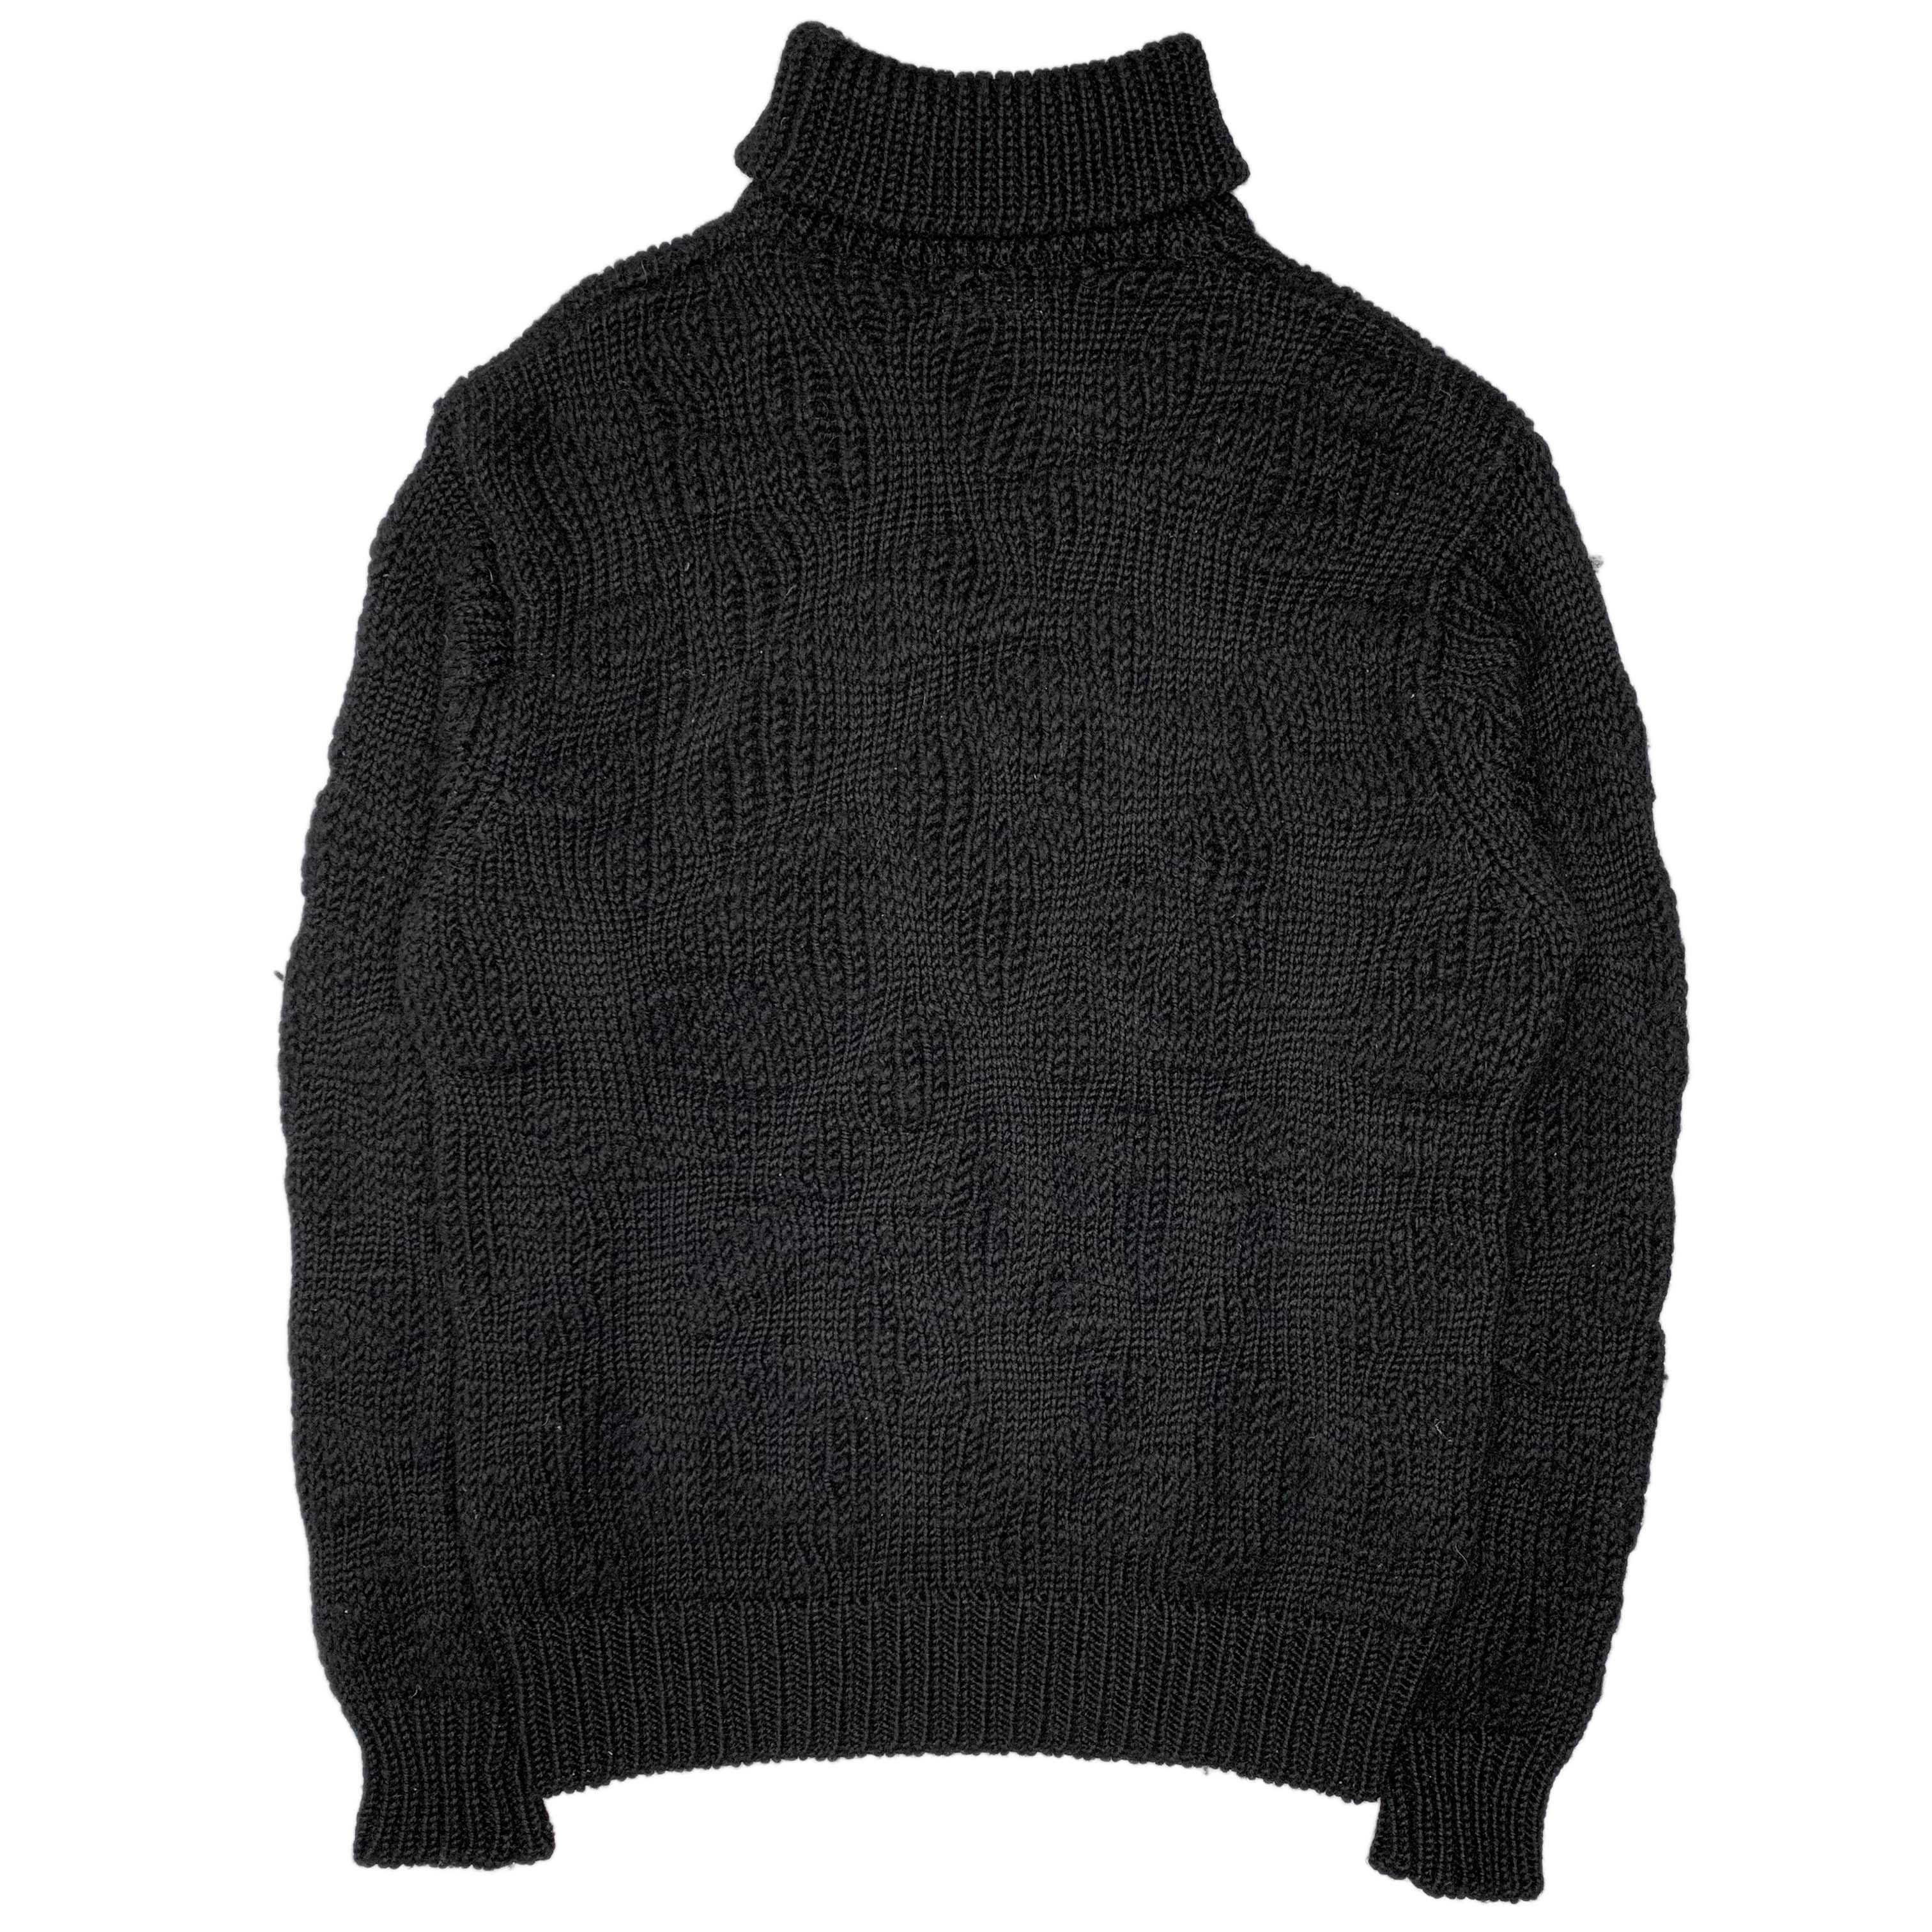 AW98 Distortion Knit Wool Turtleneck Sweater - 2